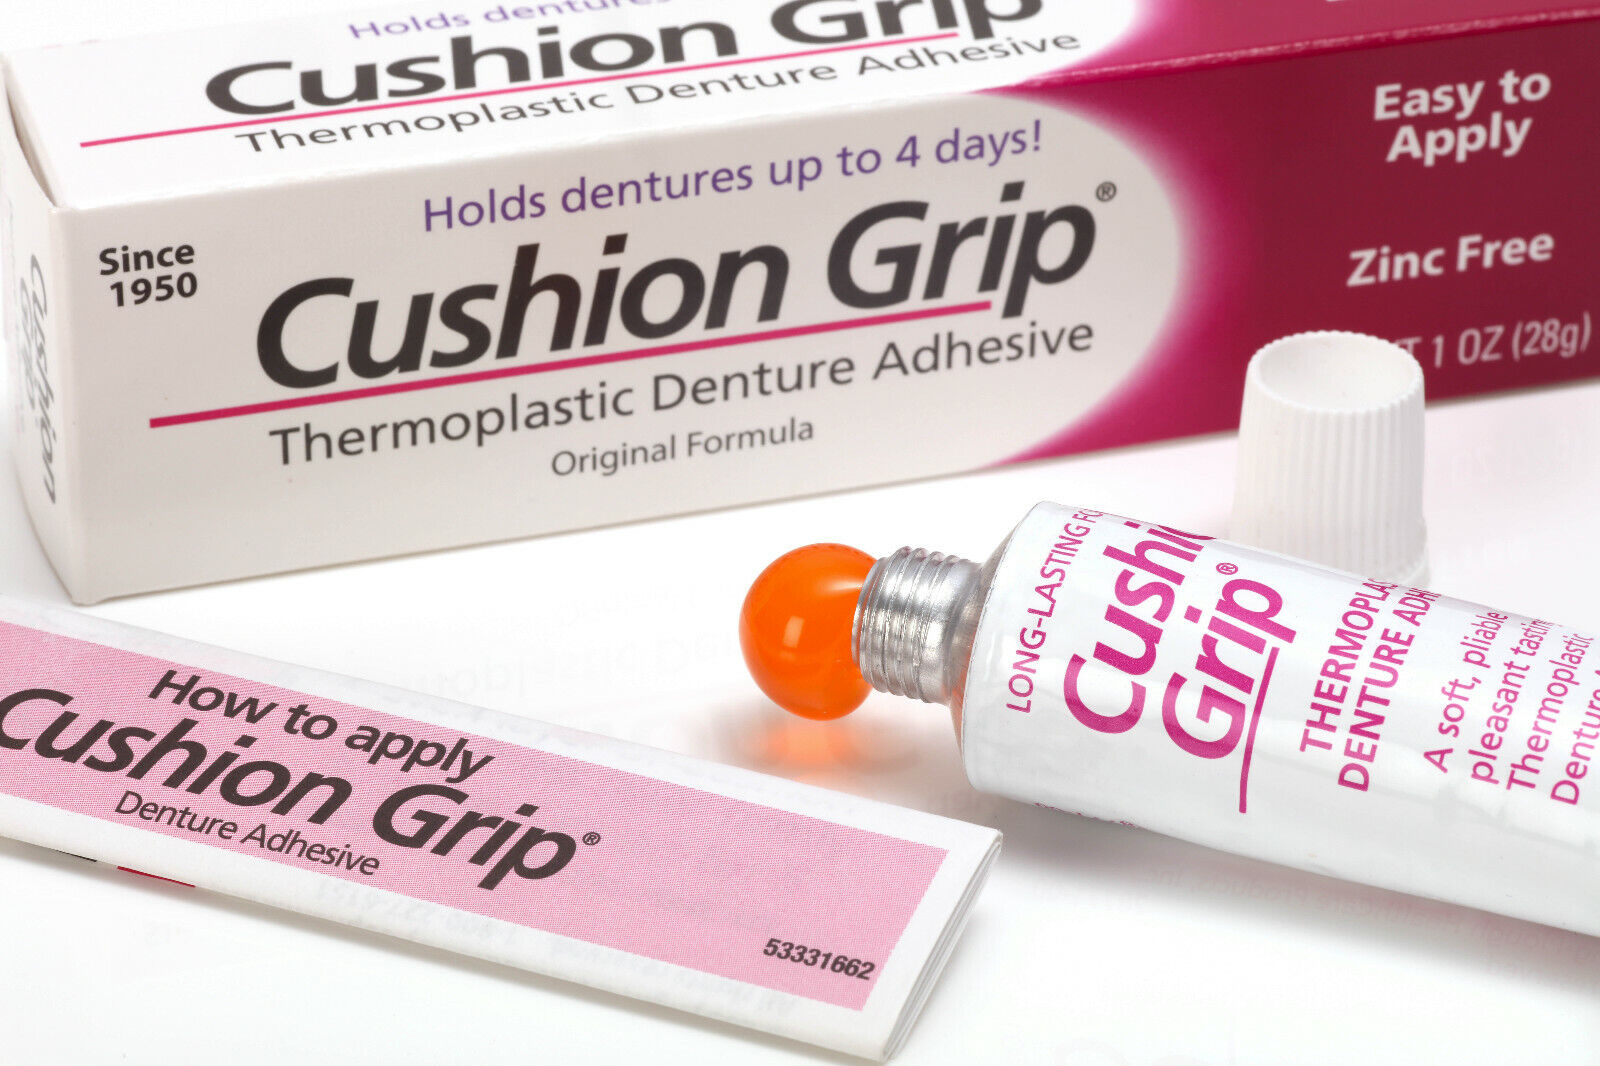 Cushion Grip Thermoplastic Denture Adhesive 1 Oz 3-Pack [Acts Like Soft Reline ] Cushion Grip GH-WOV7-7YZ6 - фотография #4